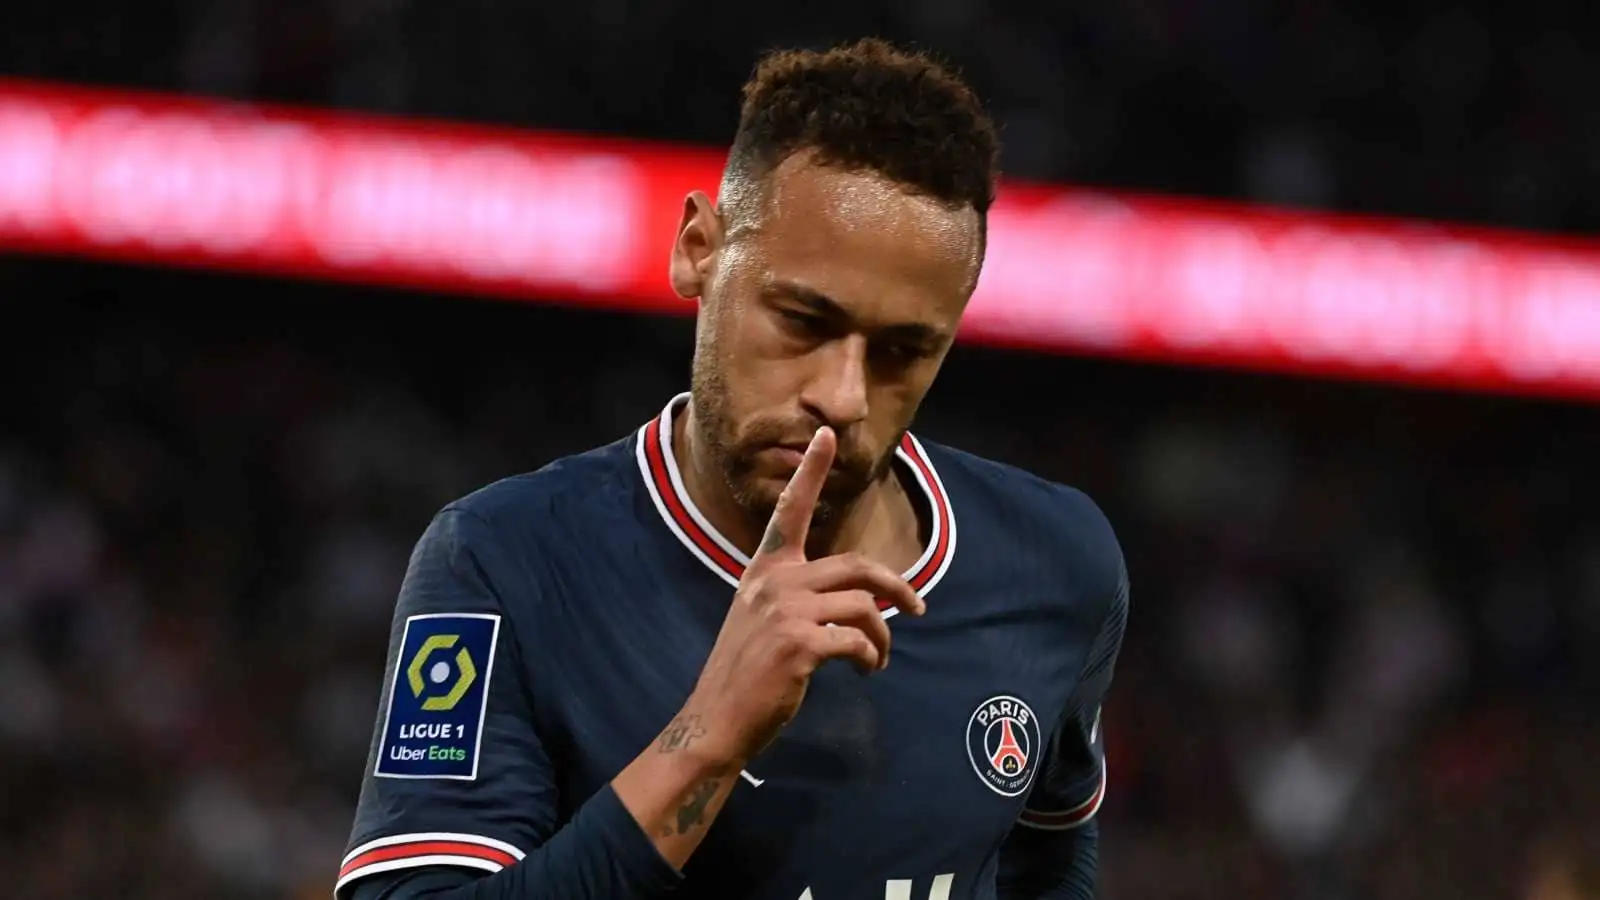 Neymar during a Paris Saint-Germain match